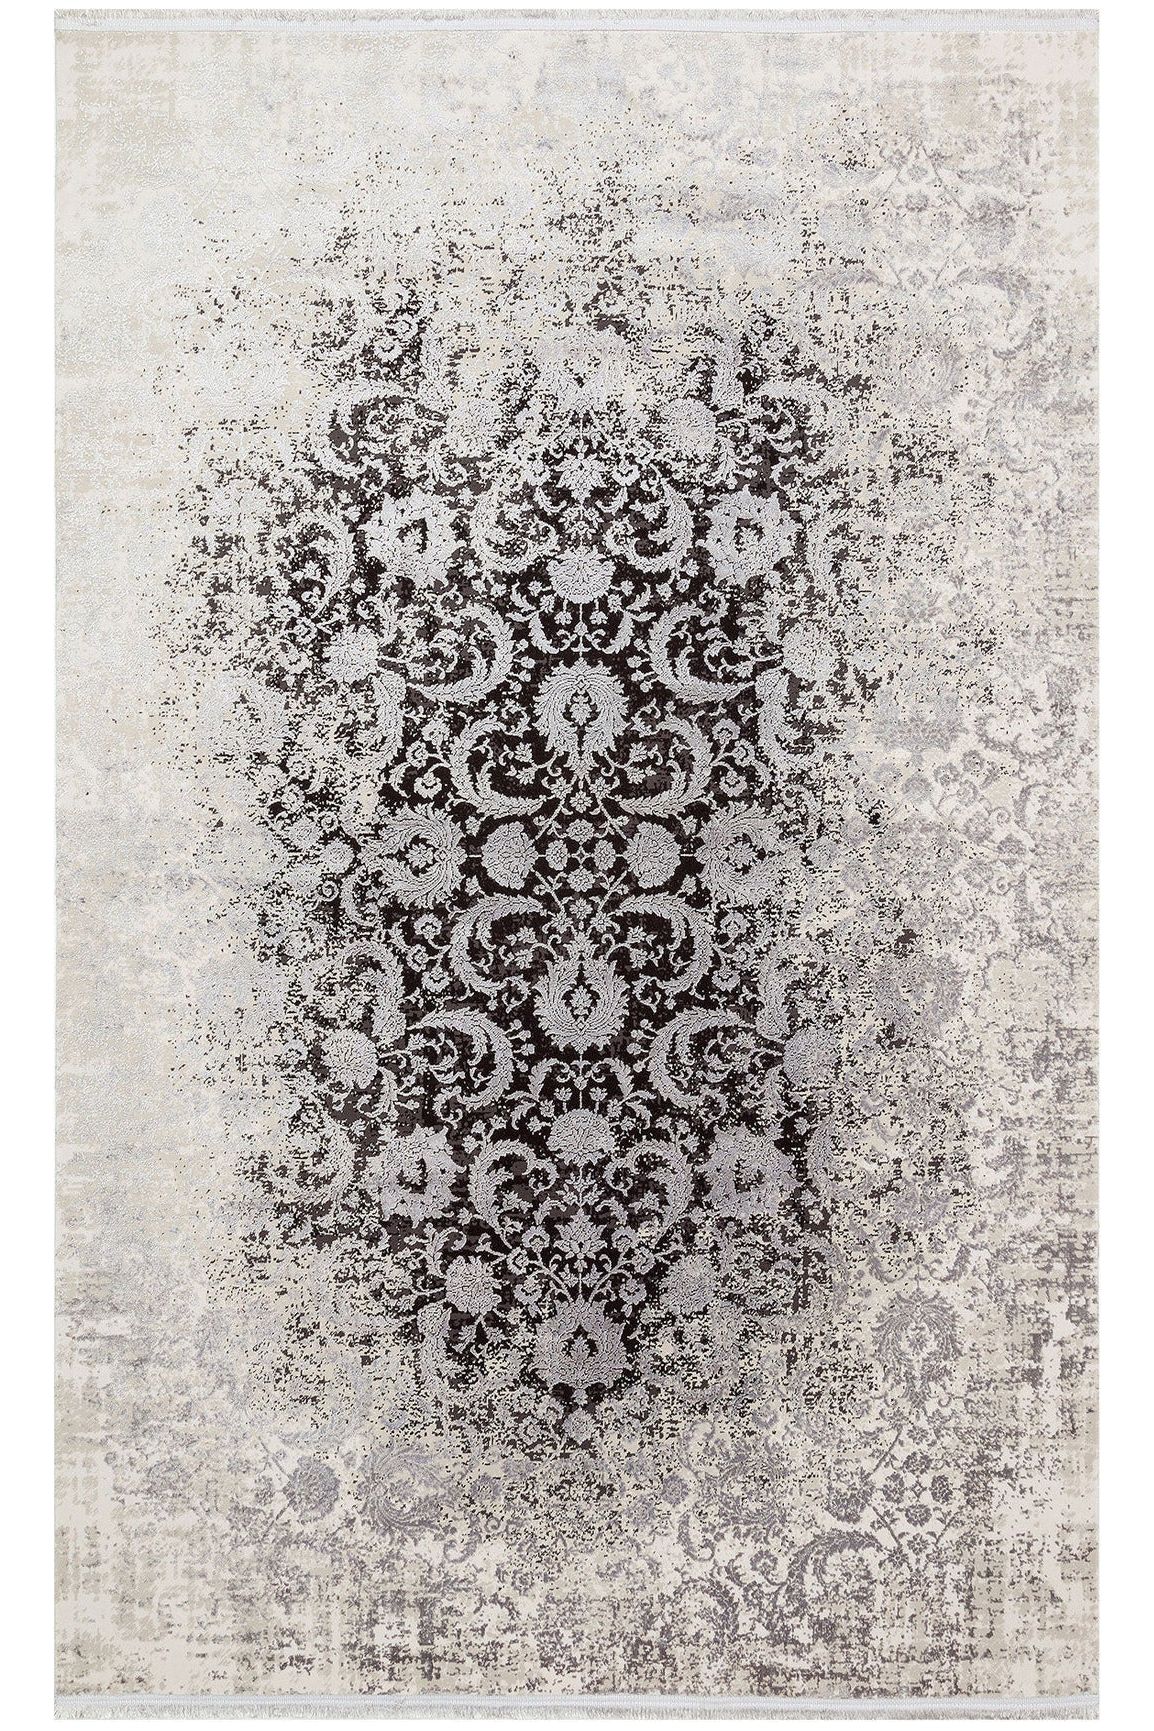 #Turkish_Carpets_Rugs# #Modern_Carpets# #Abrash_Carpets#Db 02 Ivory Mix Grey Nw